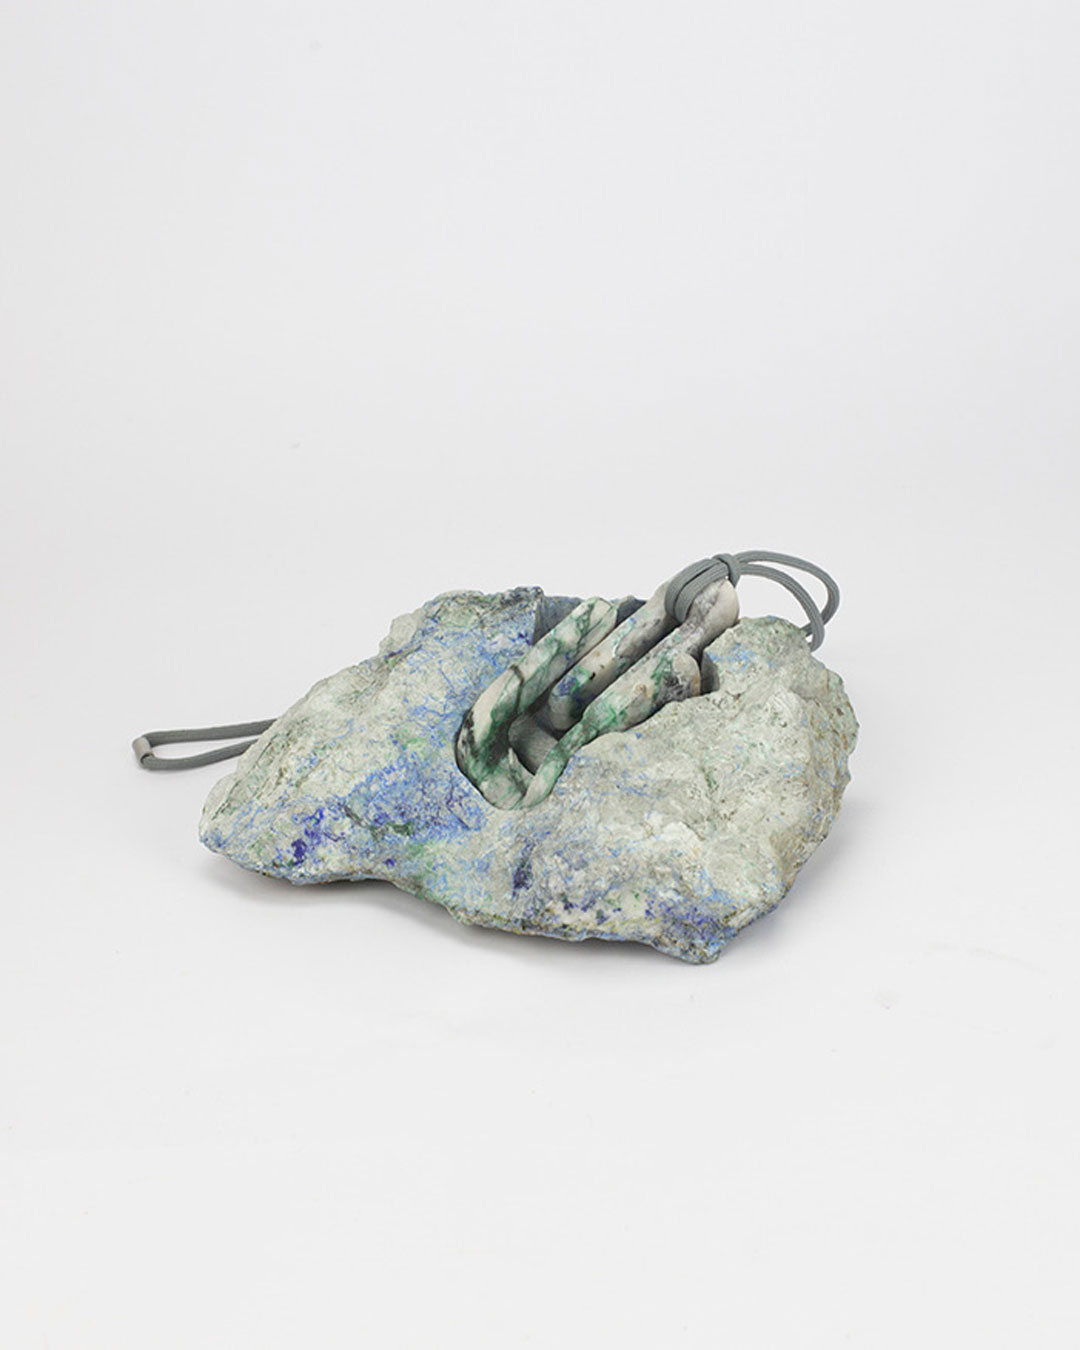 Edu Tarín, GOF3, 2019, pendant and object; azurite malachite , 110 x 65 x 50 mm, €4500 (image 2/2)